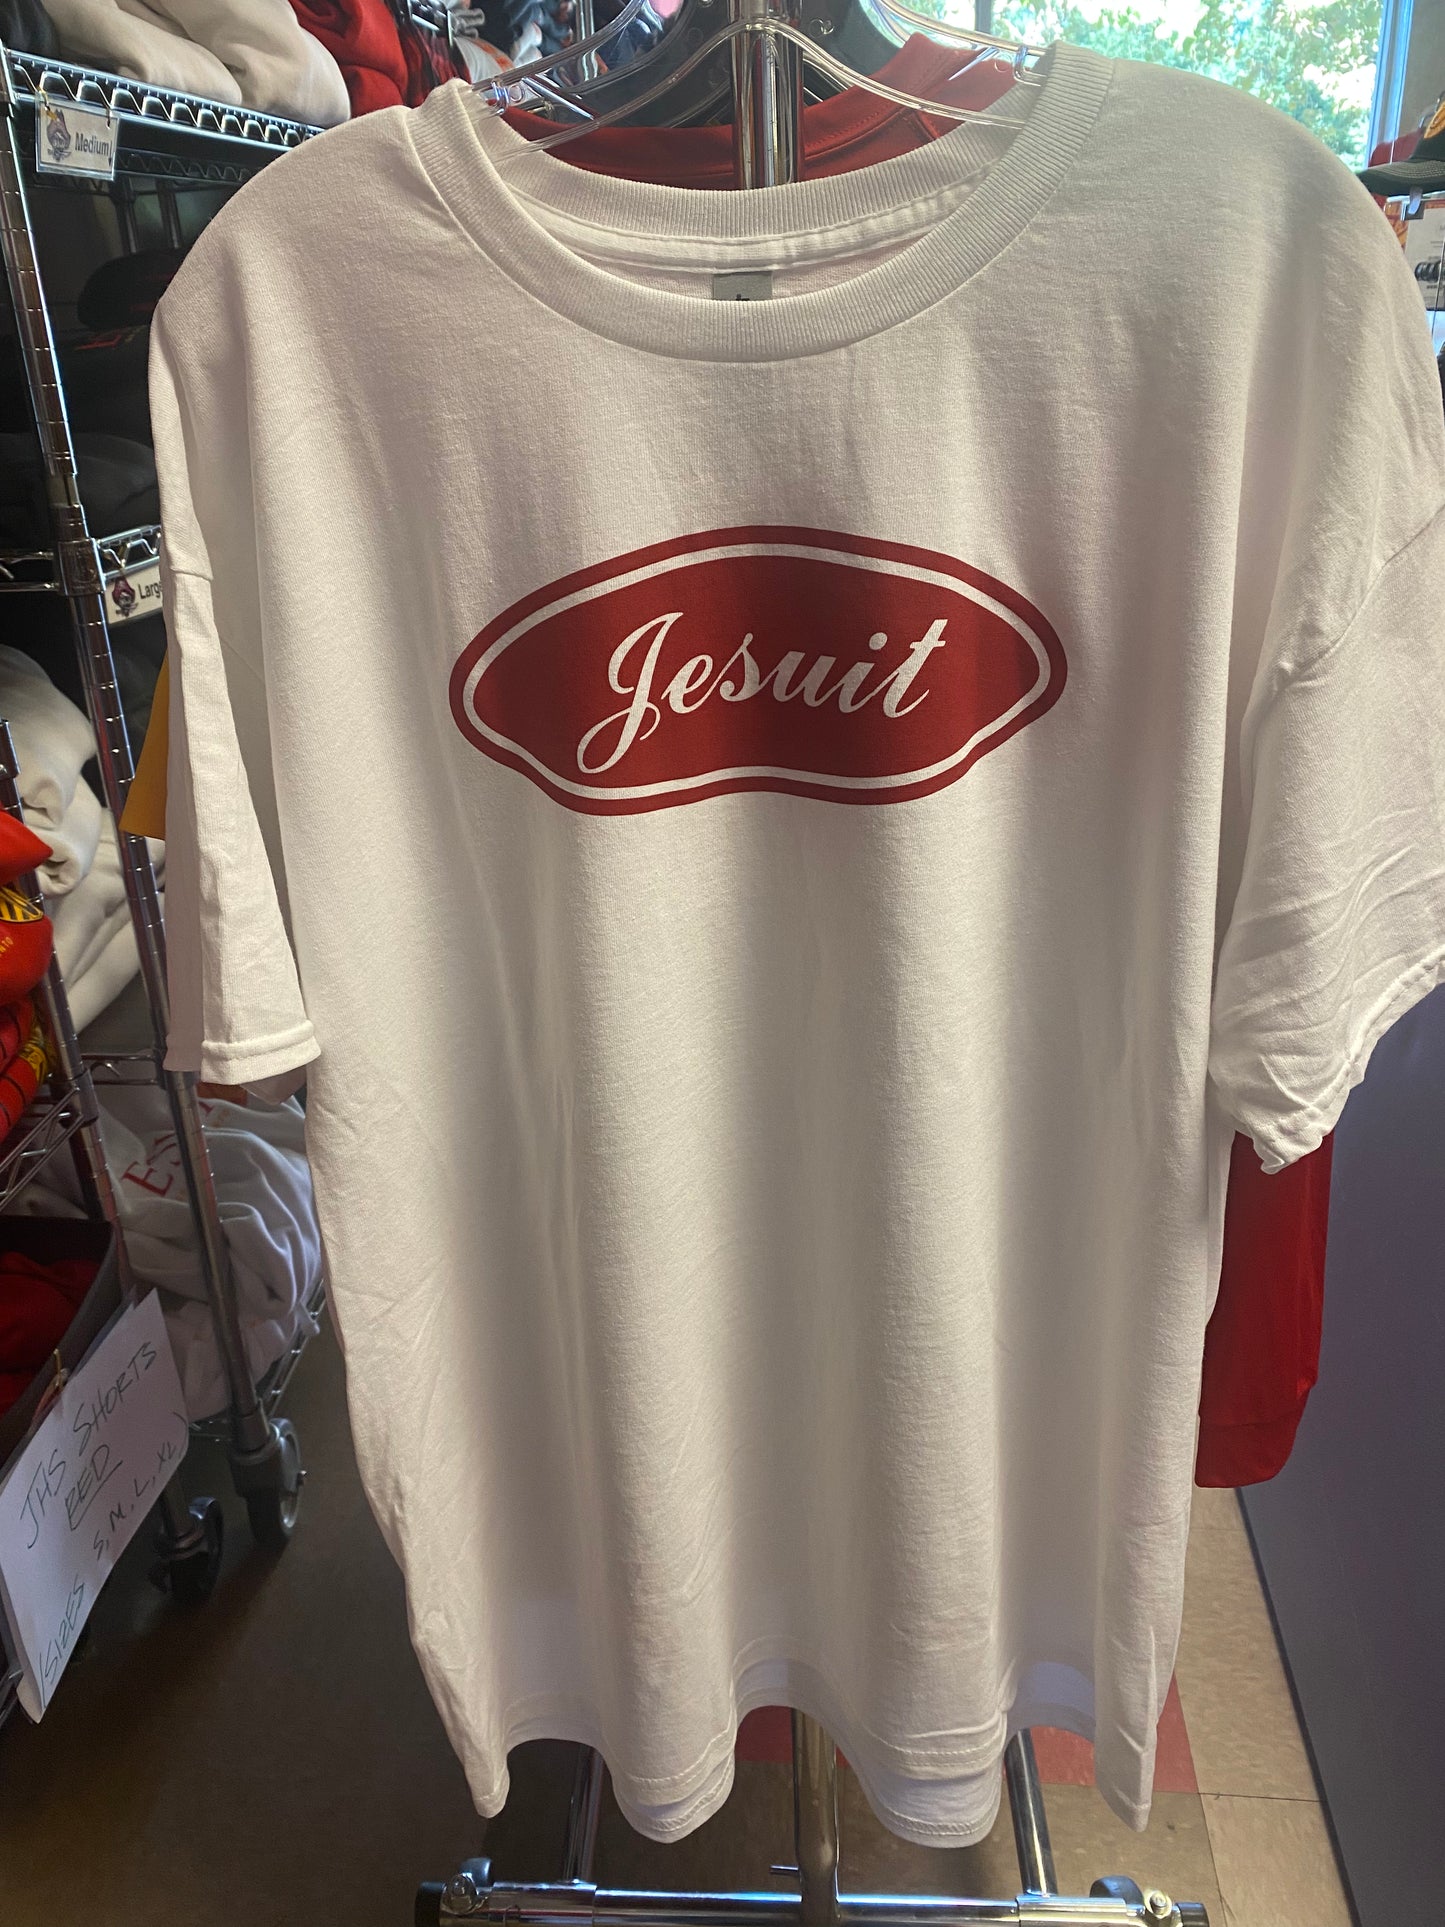 JESUIT White t-shirt “Ford” Design